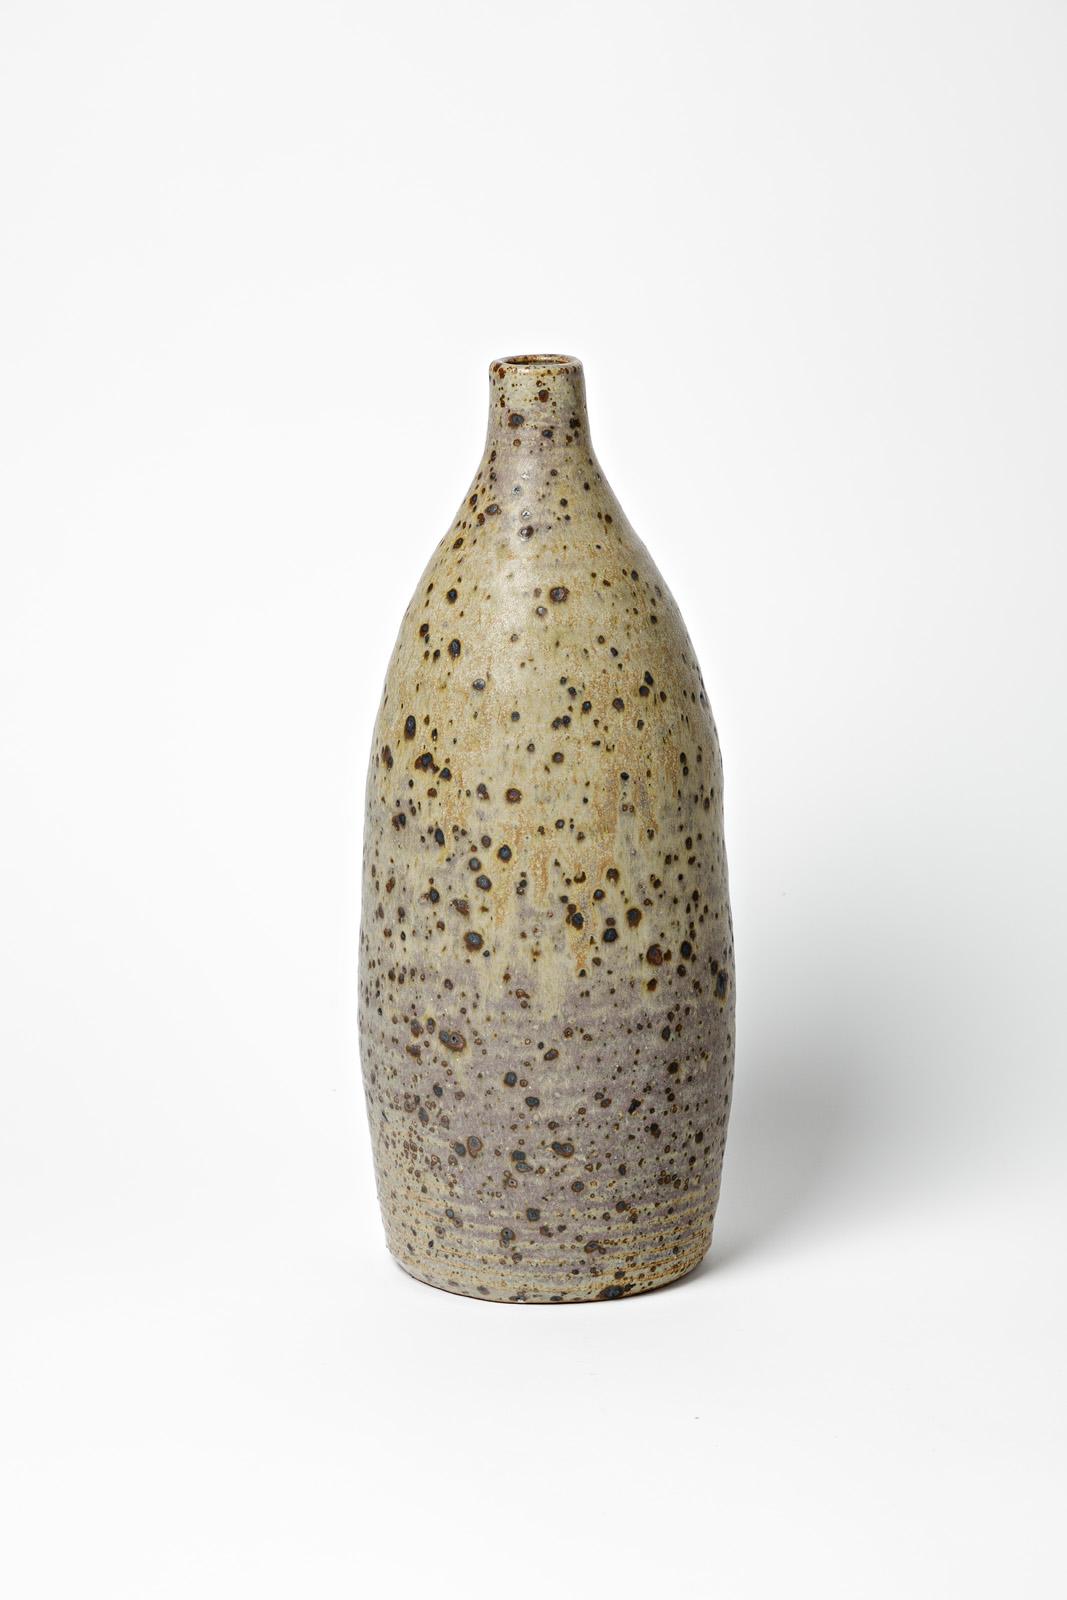 French Large 20th Century Grey Stoneware Ceramic Vase Bottle by La Borne Potters Unique For Sale